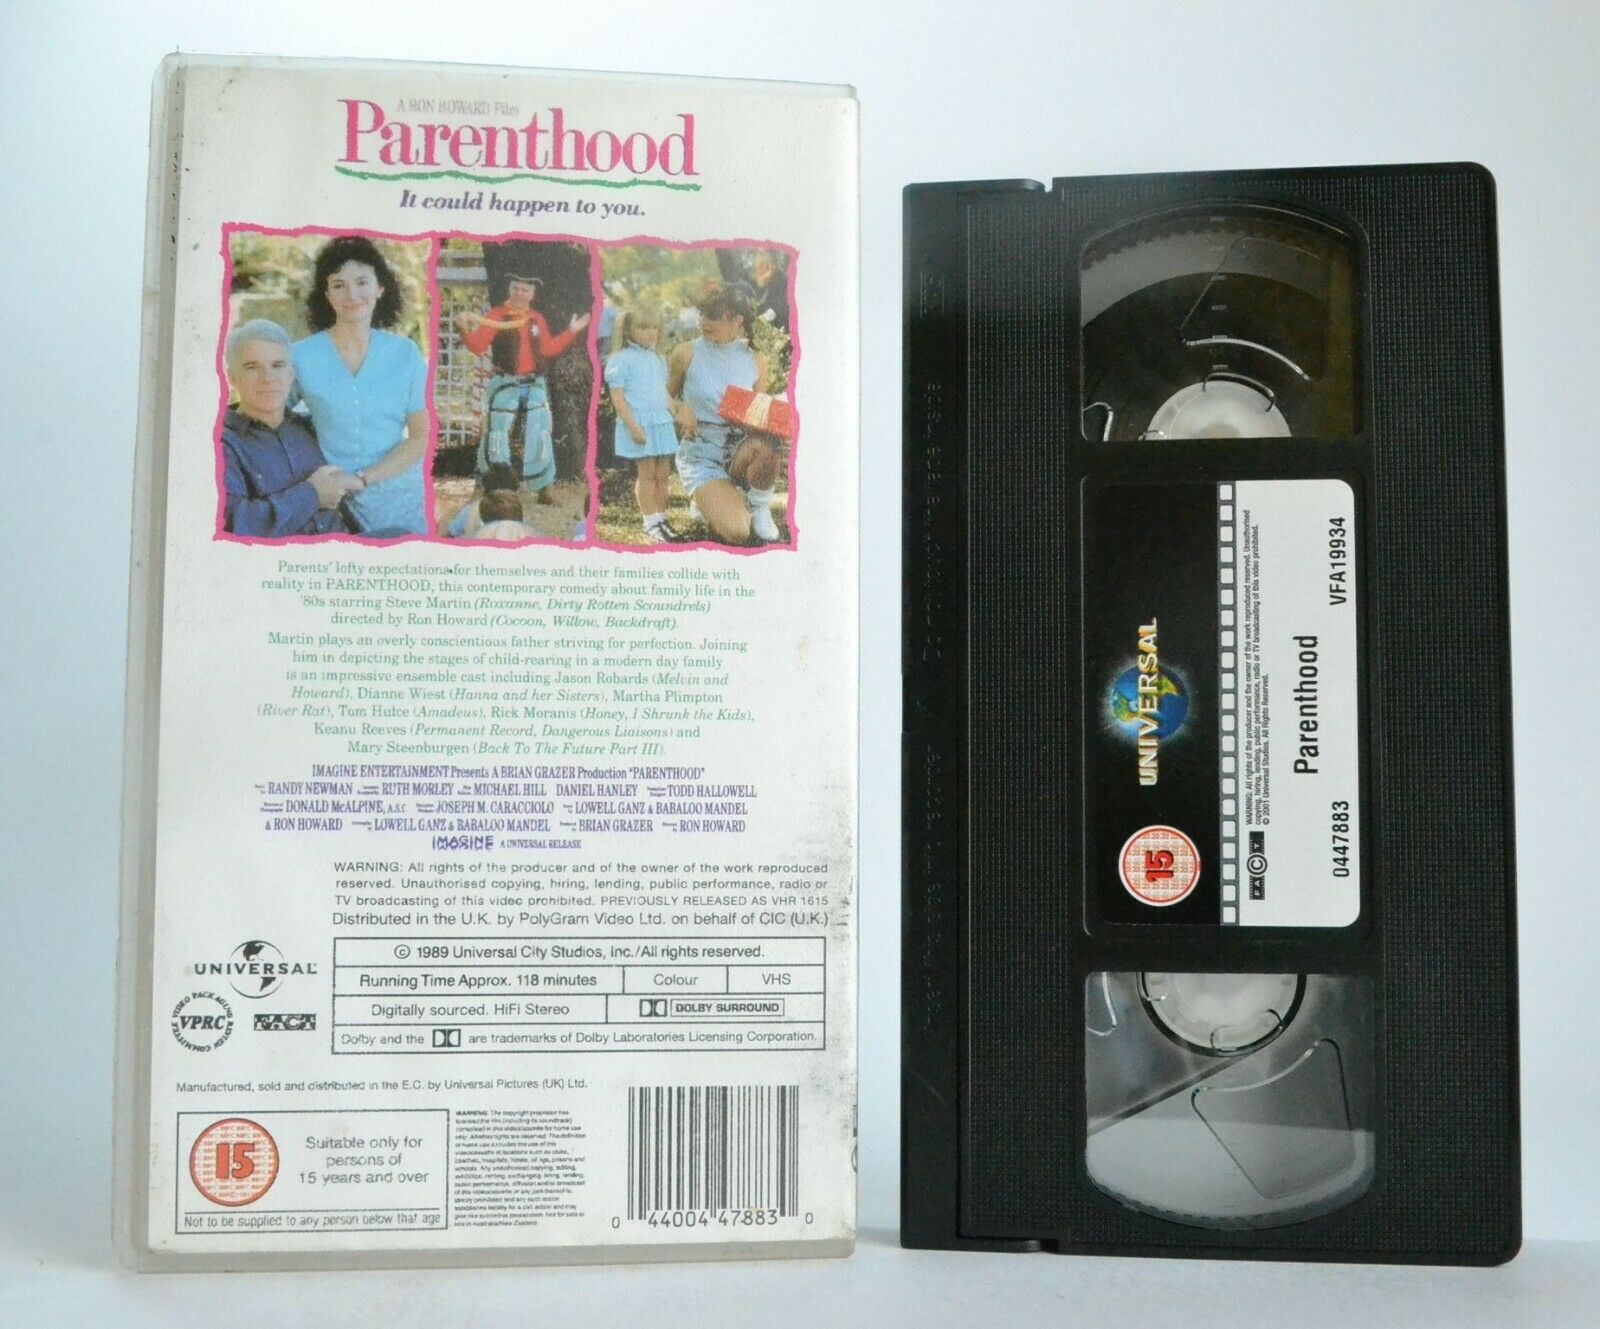 Parenthood (1989): A Ron Howard Film - Comedy - Steve Martin/Rick Moranis - VHS-